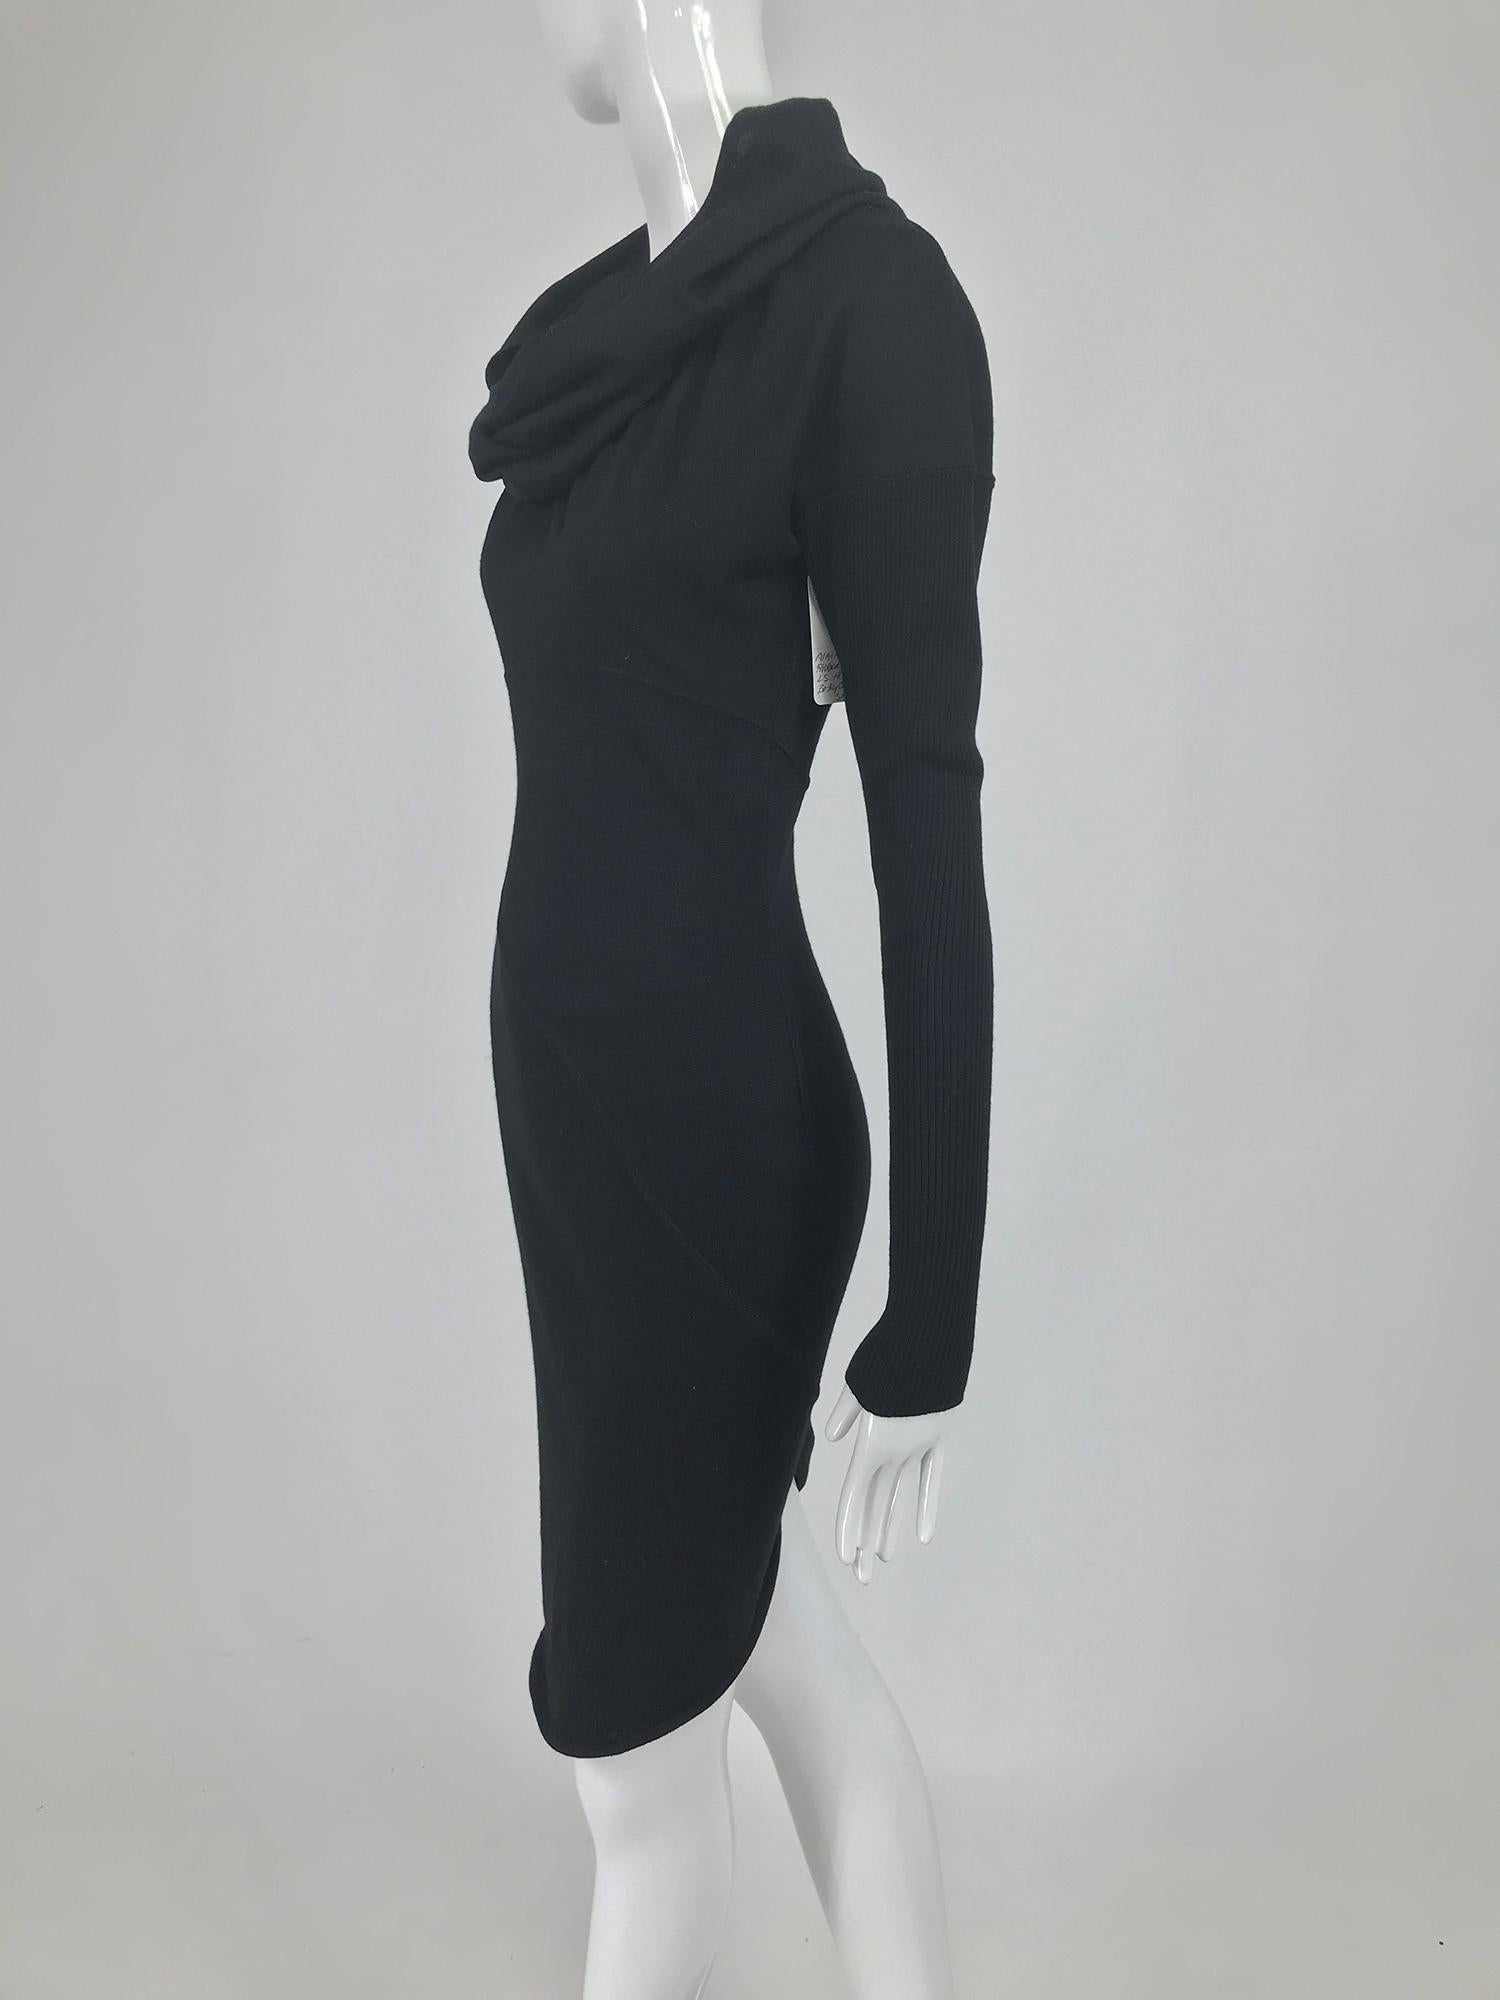 Azzedine Alaïa Black Wool Knit Hooded Body Con Dress 1980s 4